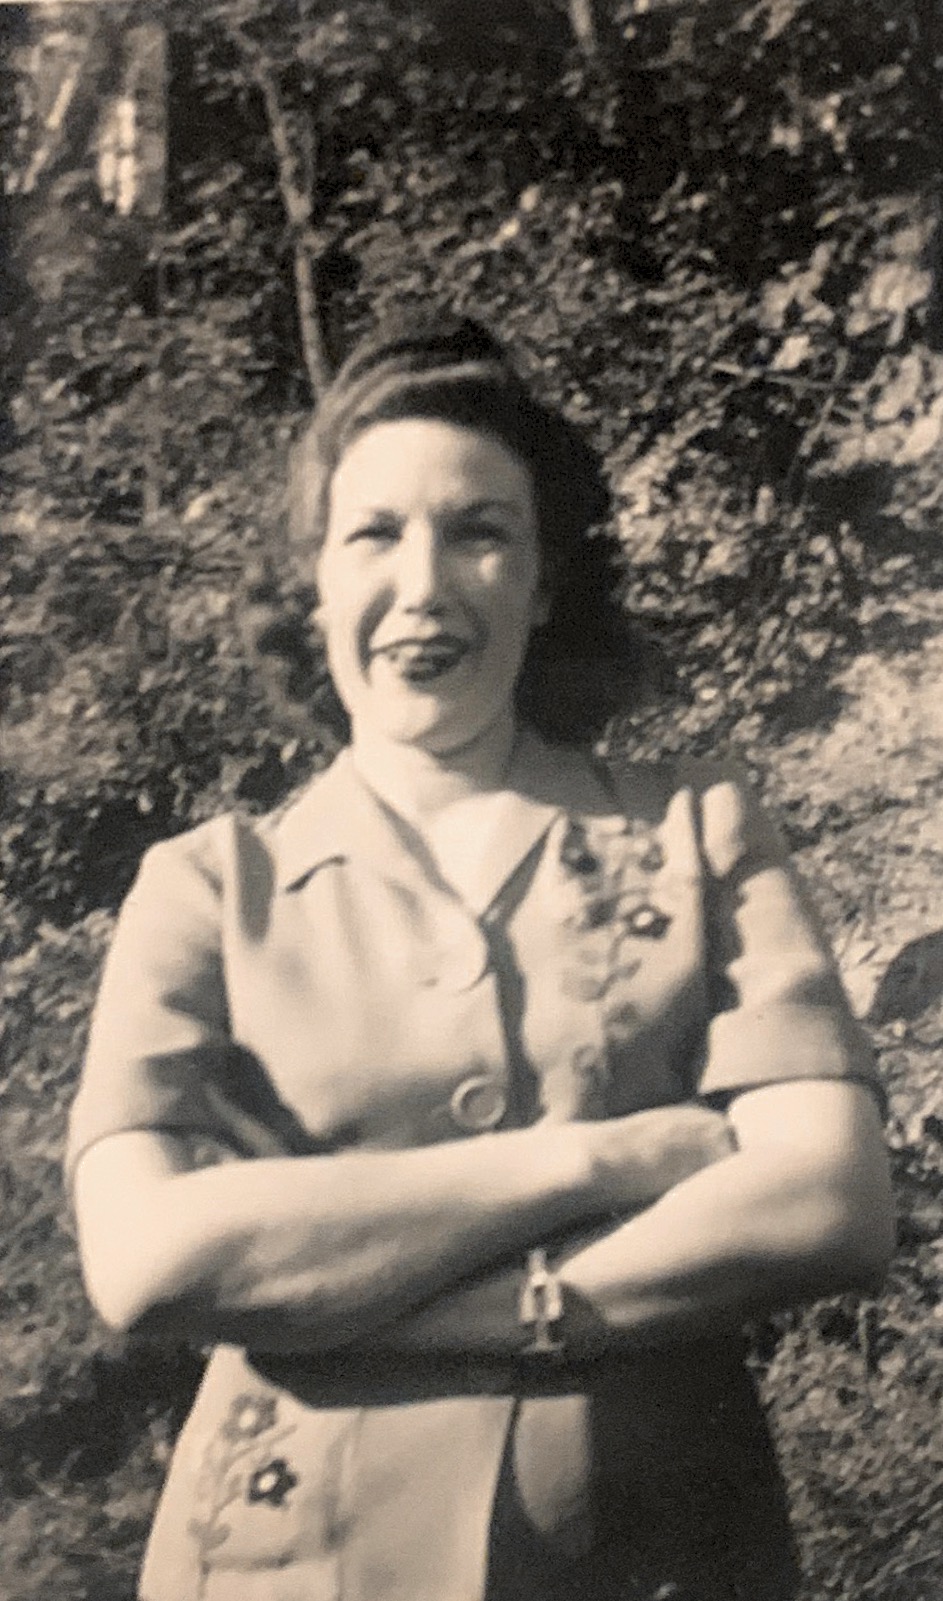 My grandmother circa 1945.
